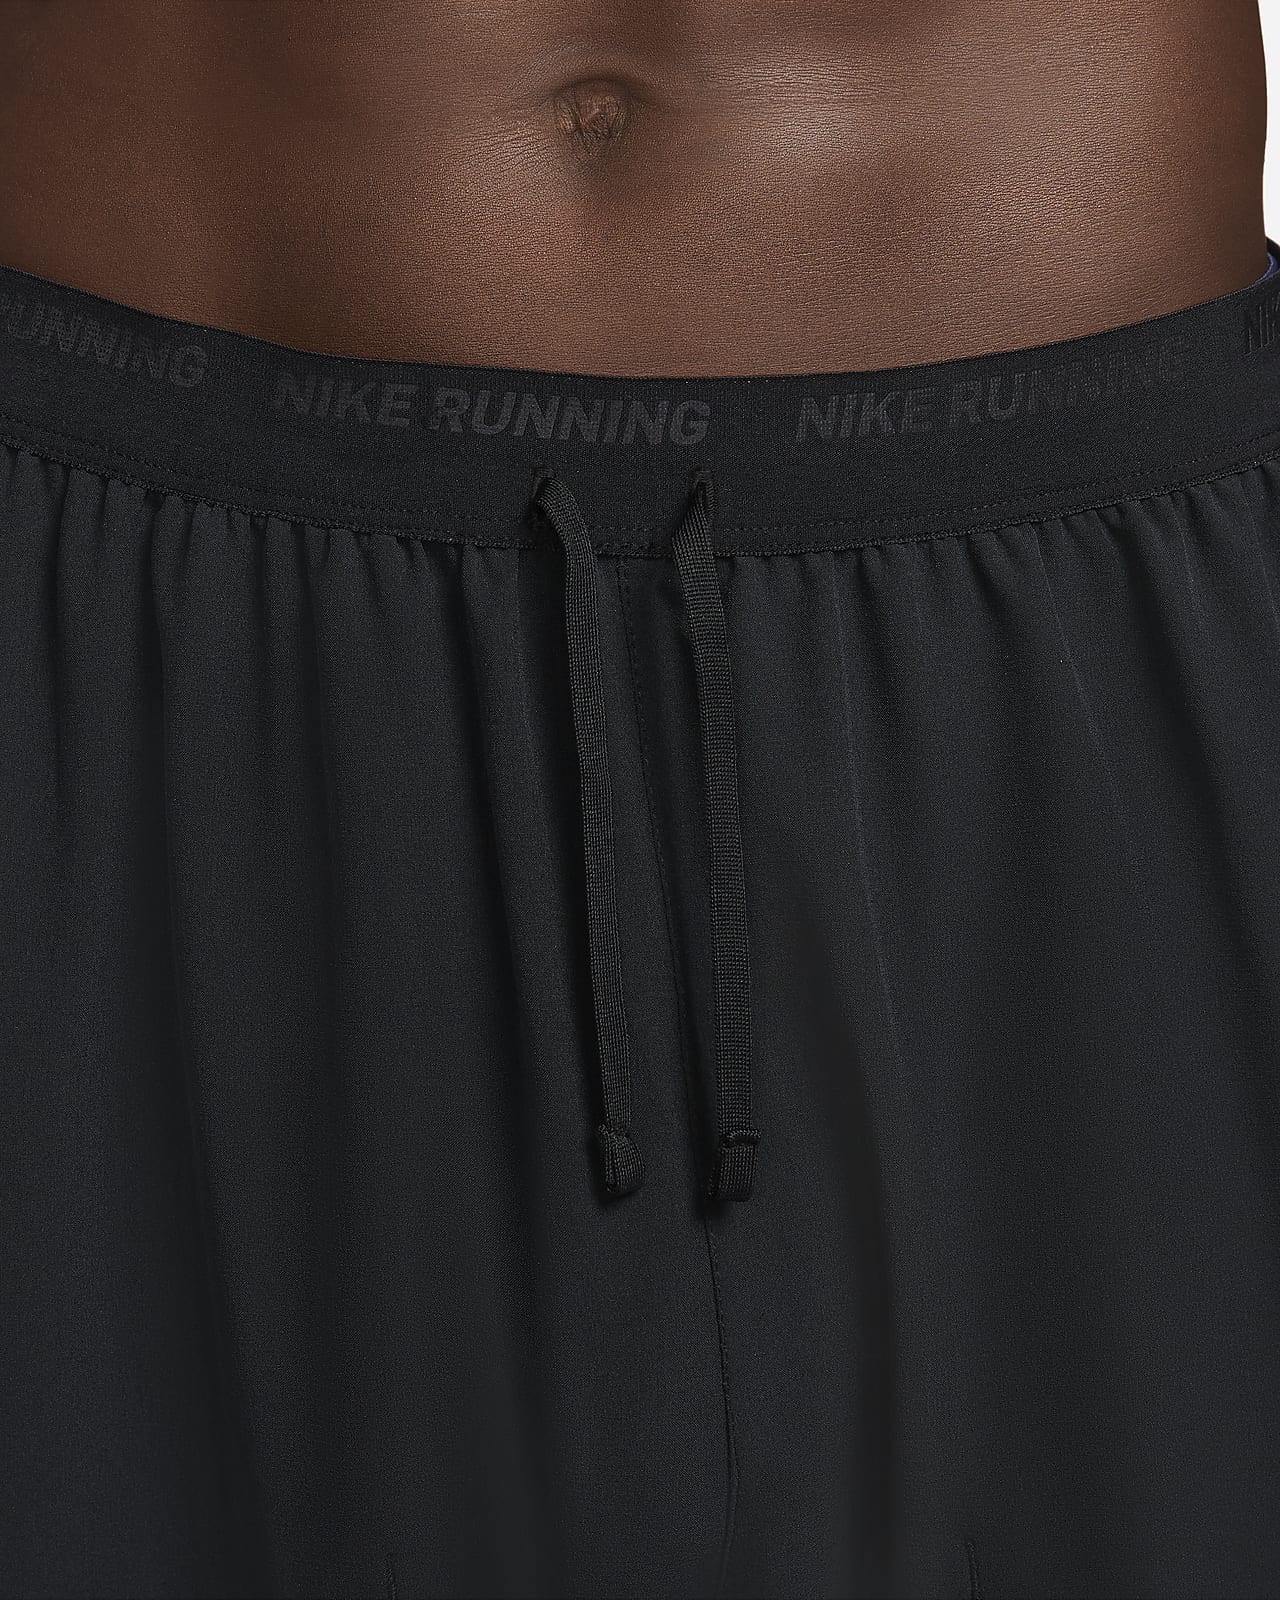 $80 NEW Nike Men's Dri-Fit Phenom Elite TECHKNIT Running Tights CZ8823-084  LARGE